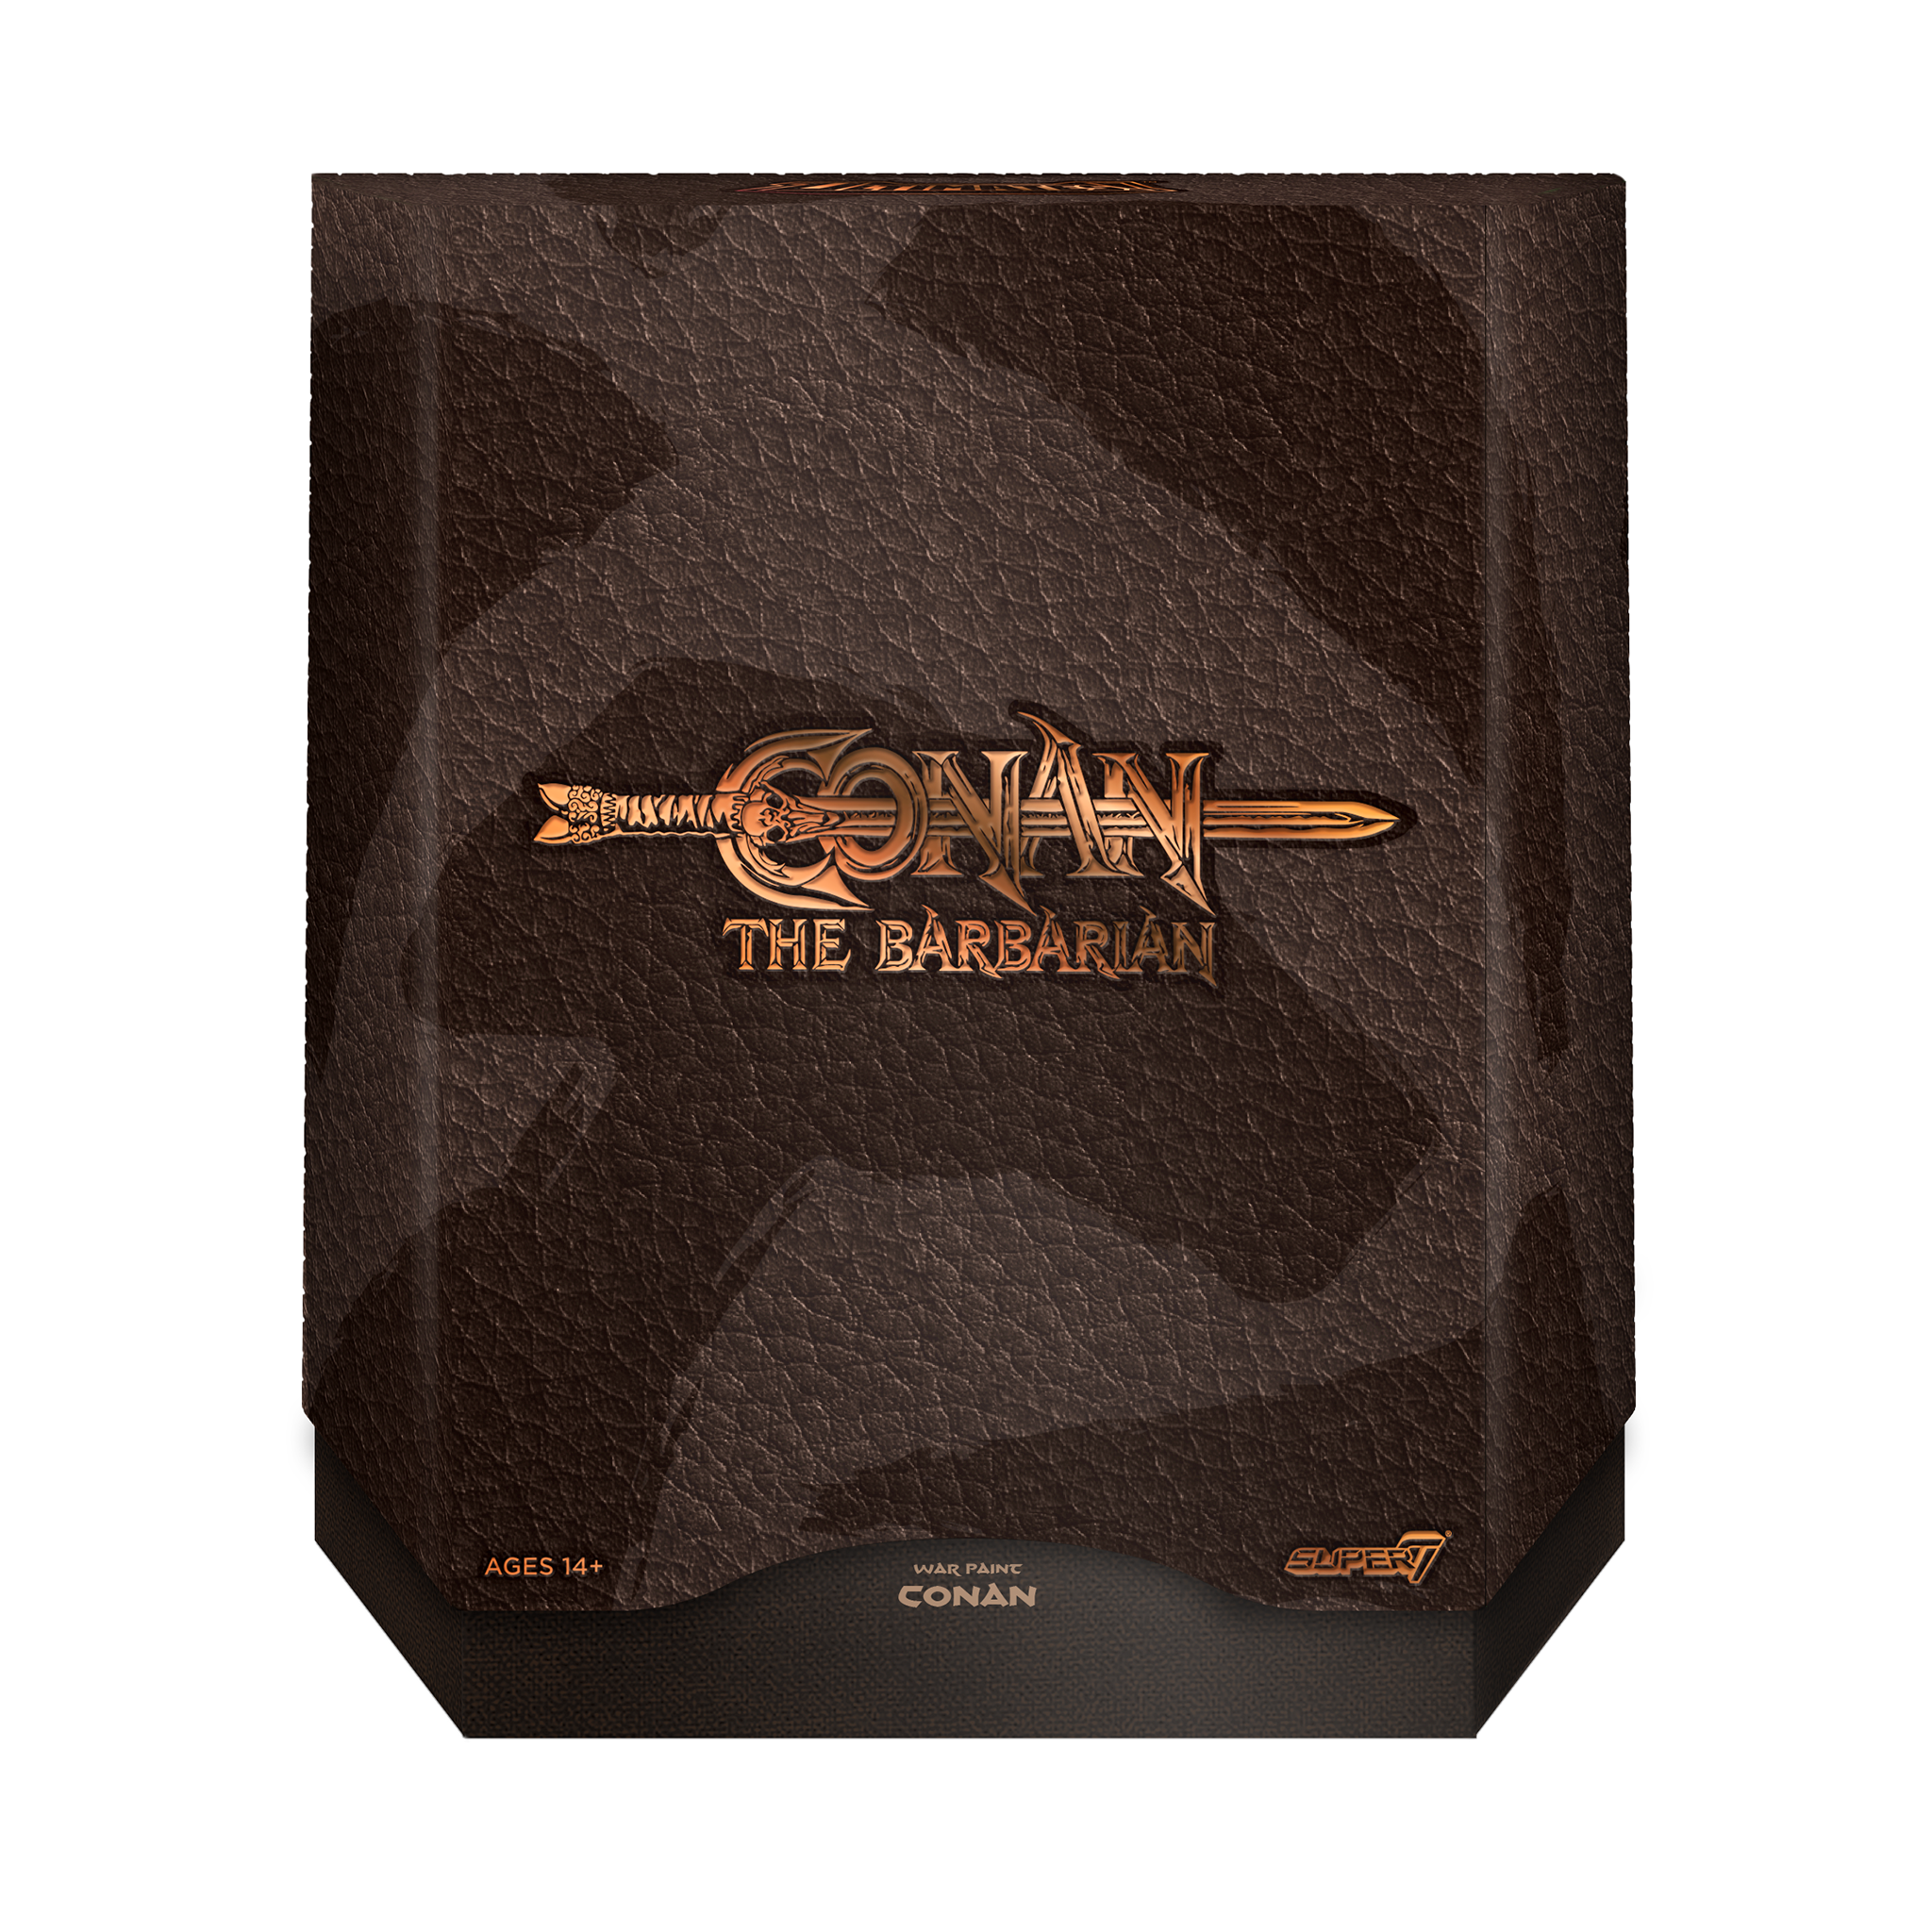 War Paint Conan box